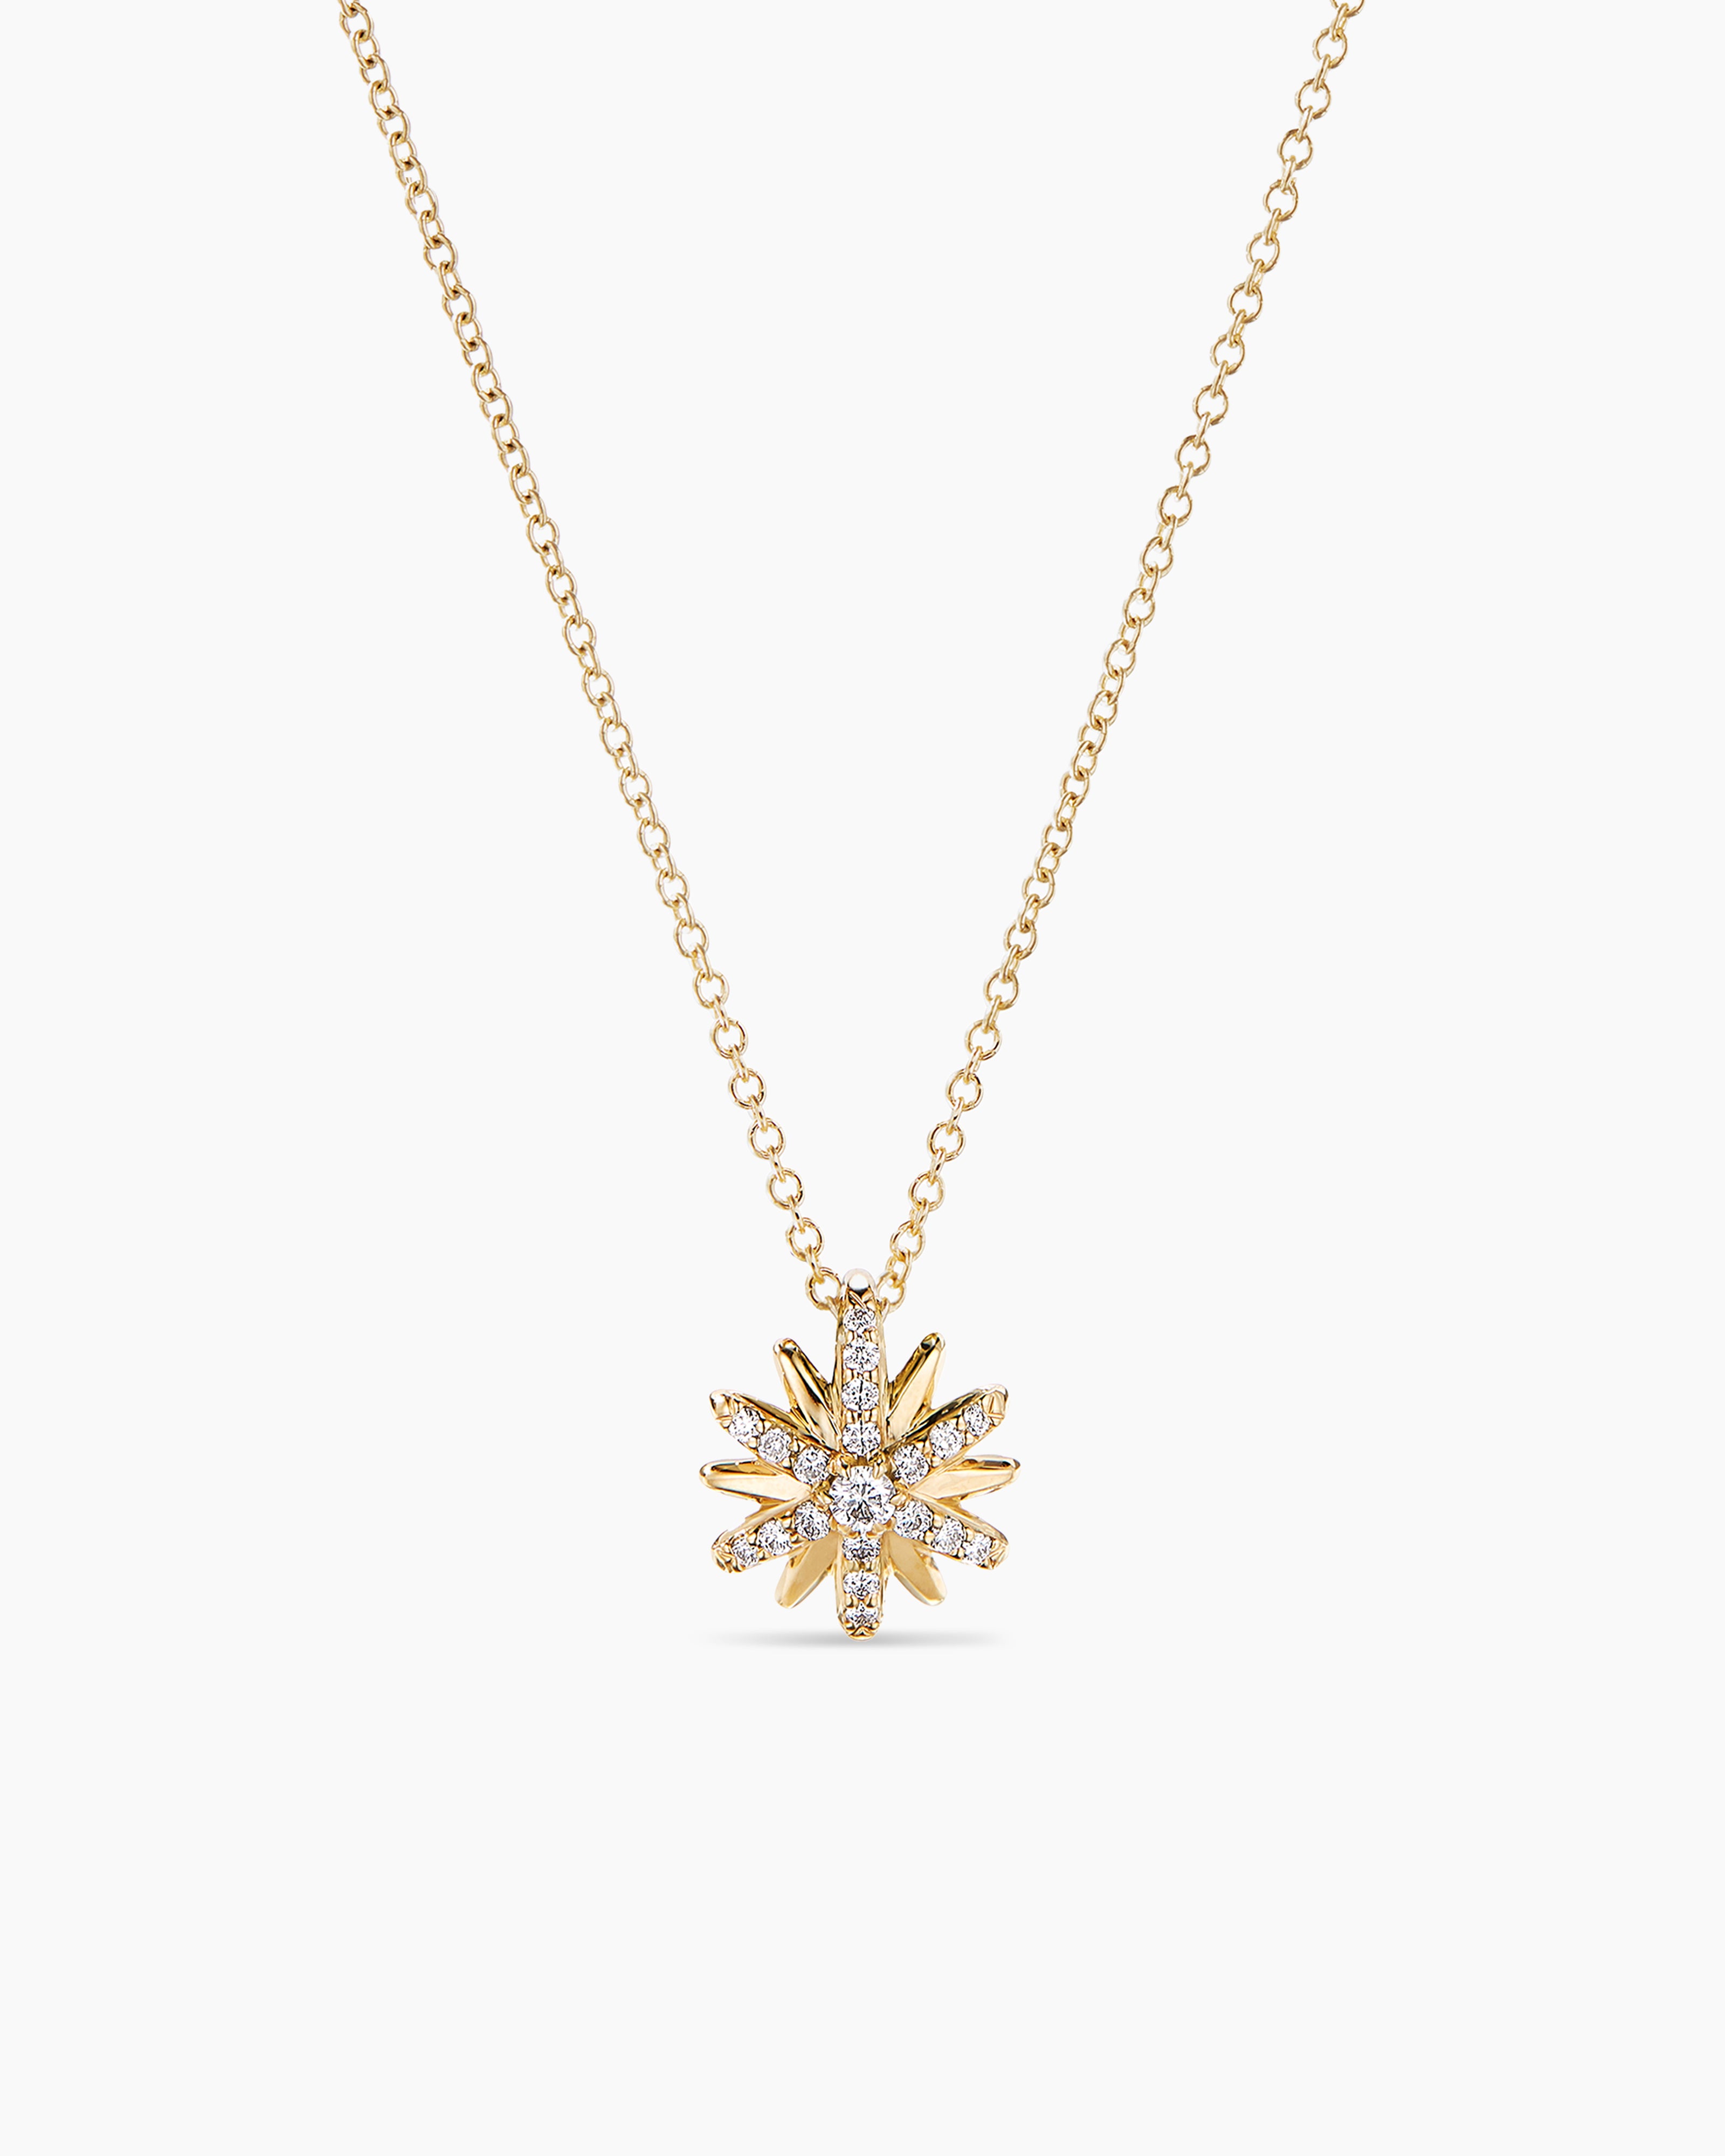 Petite Starburst Pendant Necklace in 18K Yellow Gold with Diamonds, 10.5mm  | David Yurman